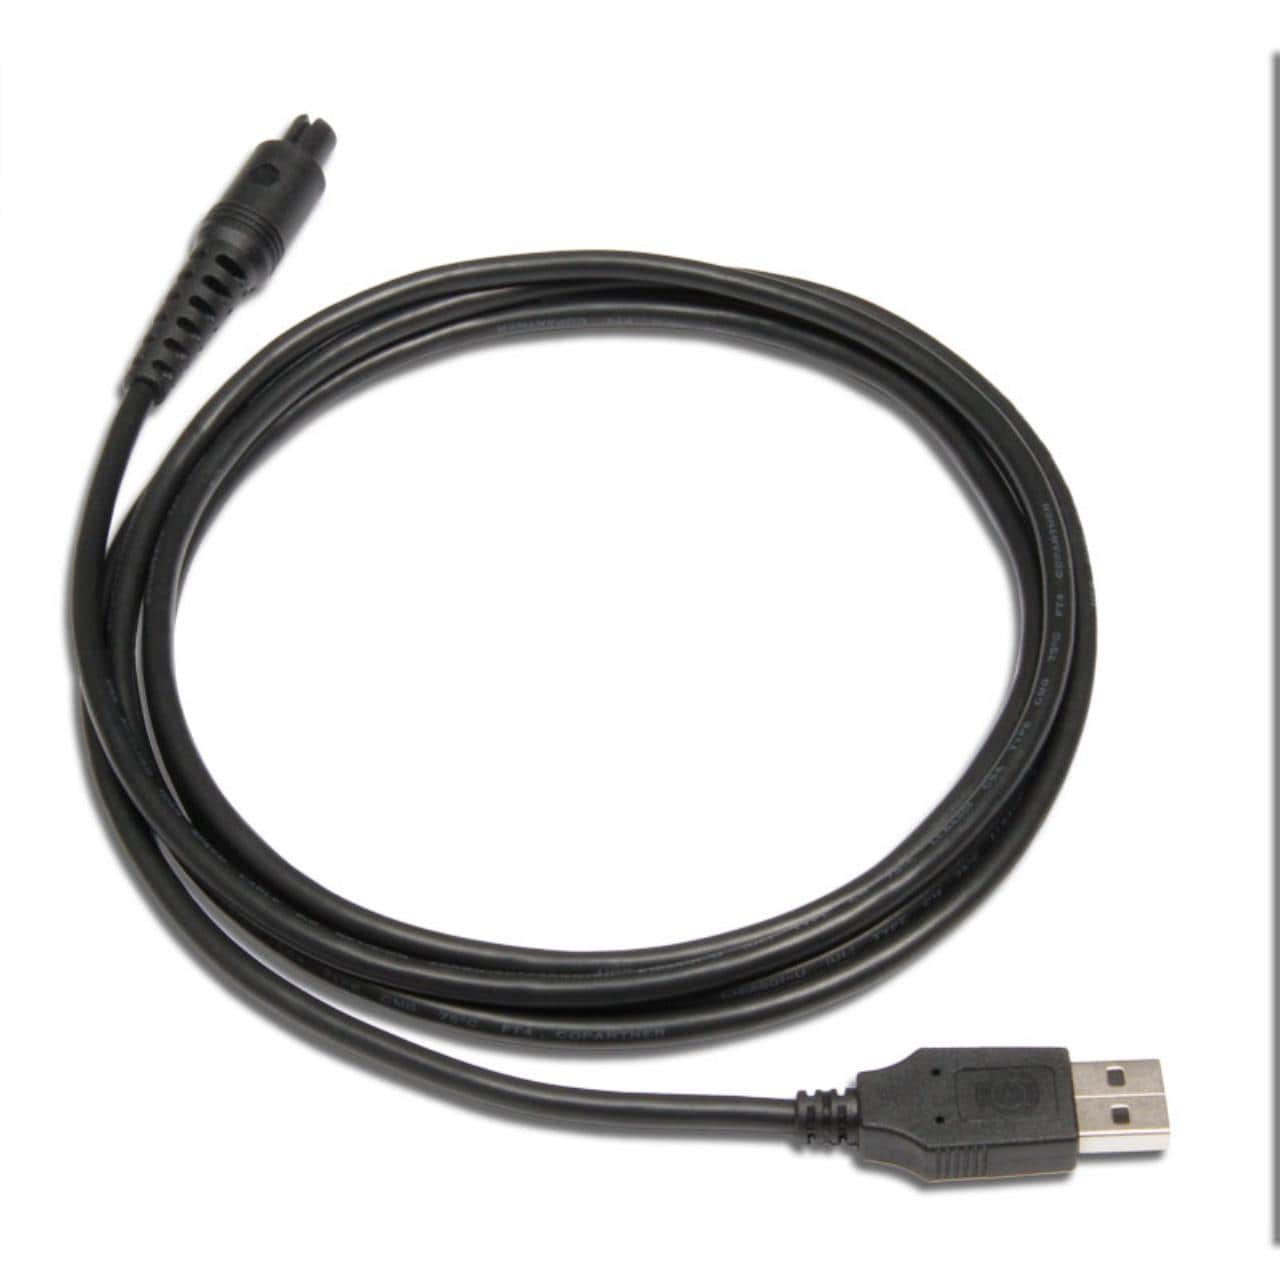 CTEK USB-C Charger Cable for CS Free 12 v Cig Plug